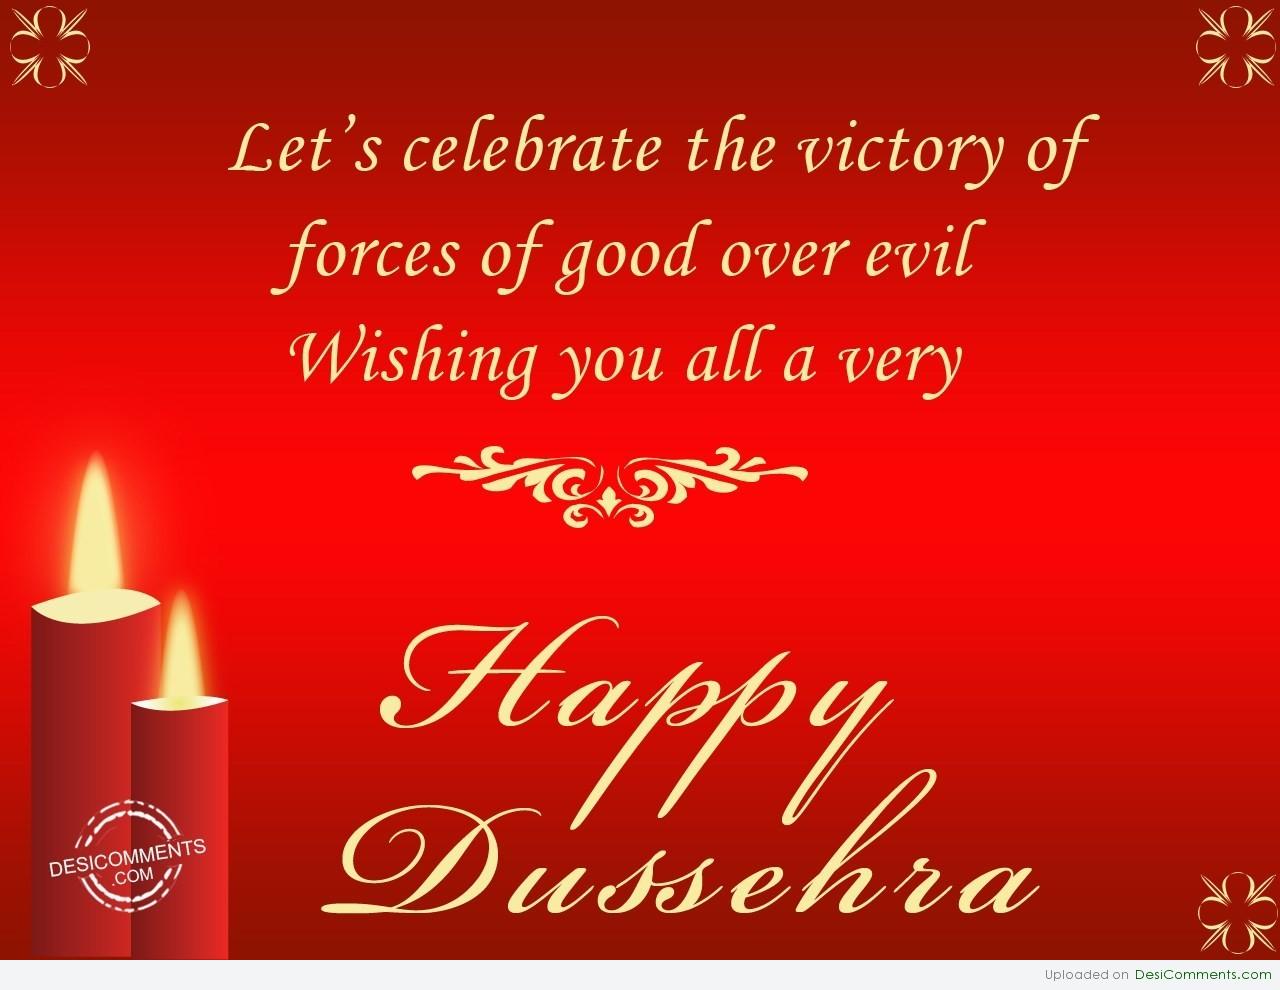 Happy Vijayadashami Dussehra Whatsapp Status & Messages